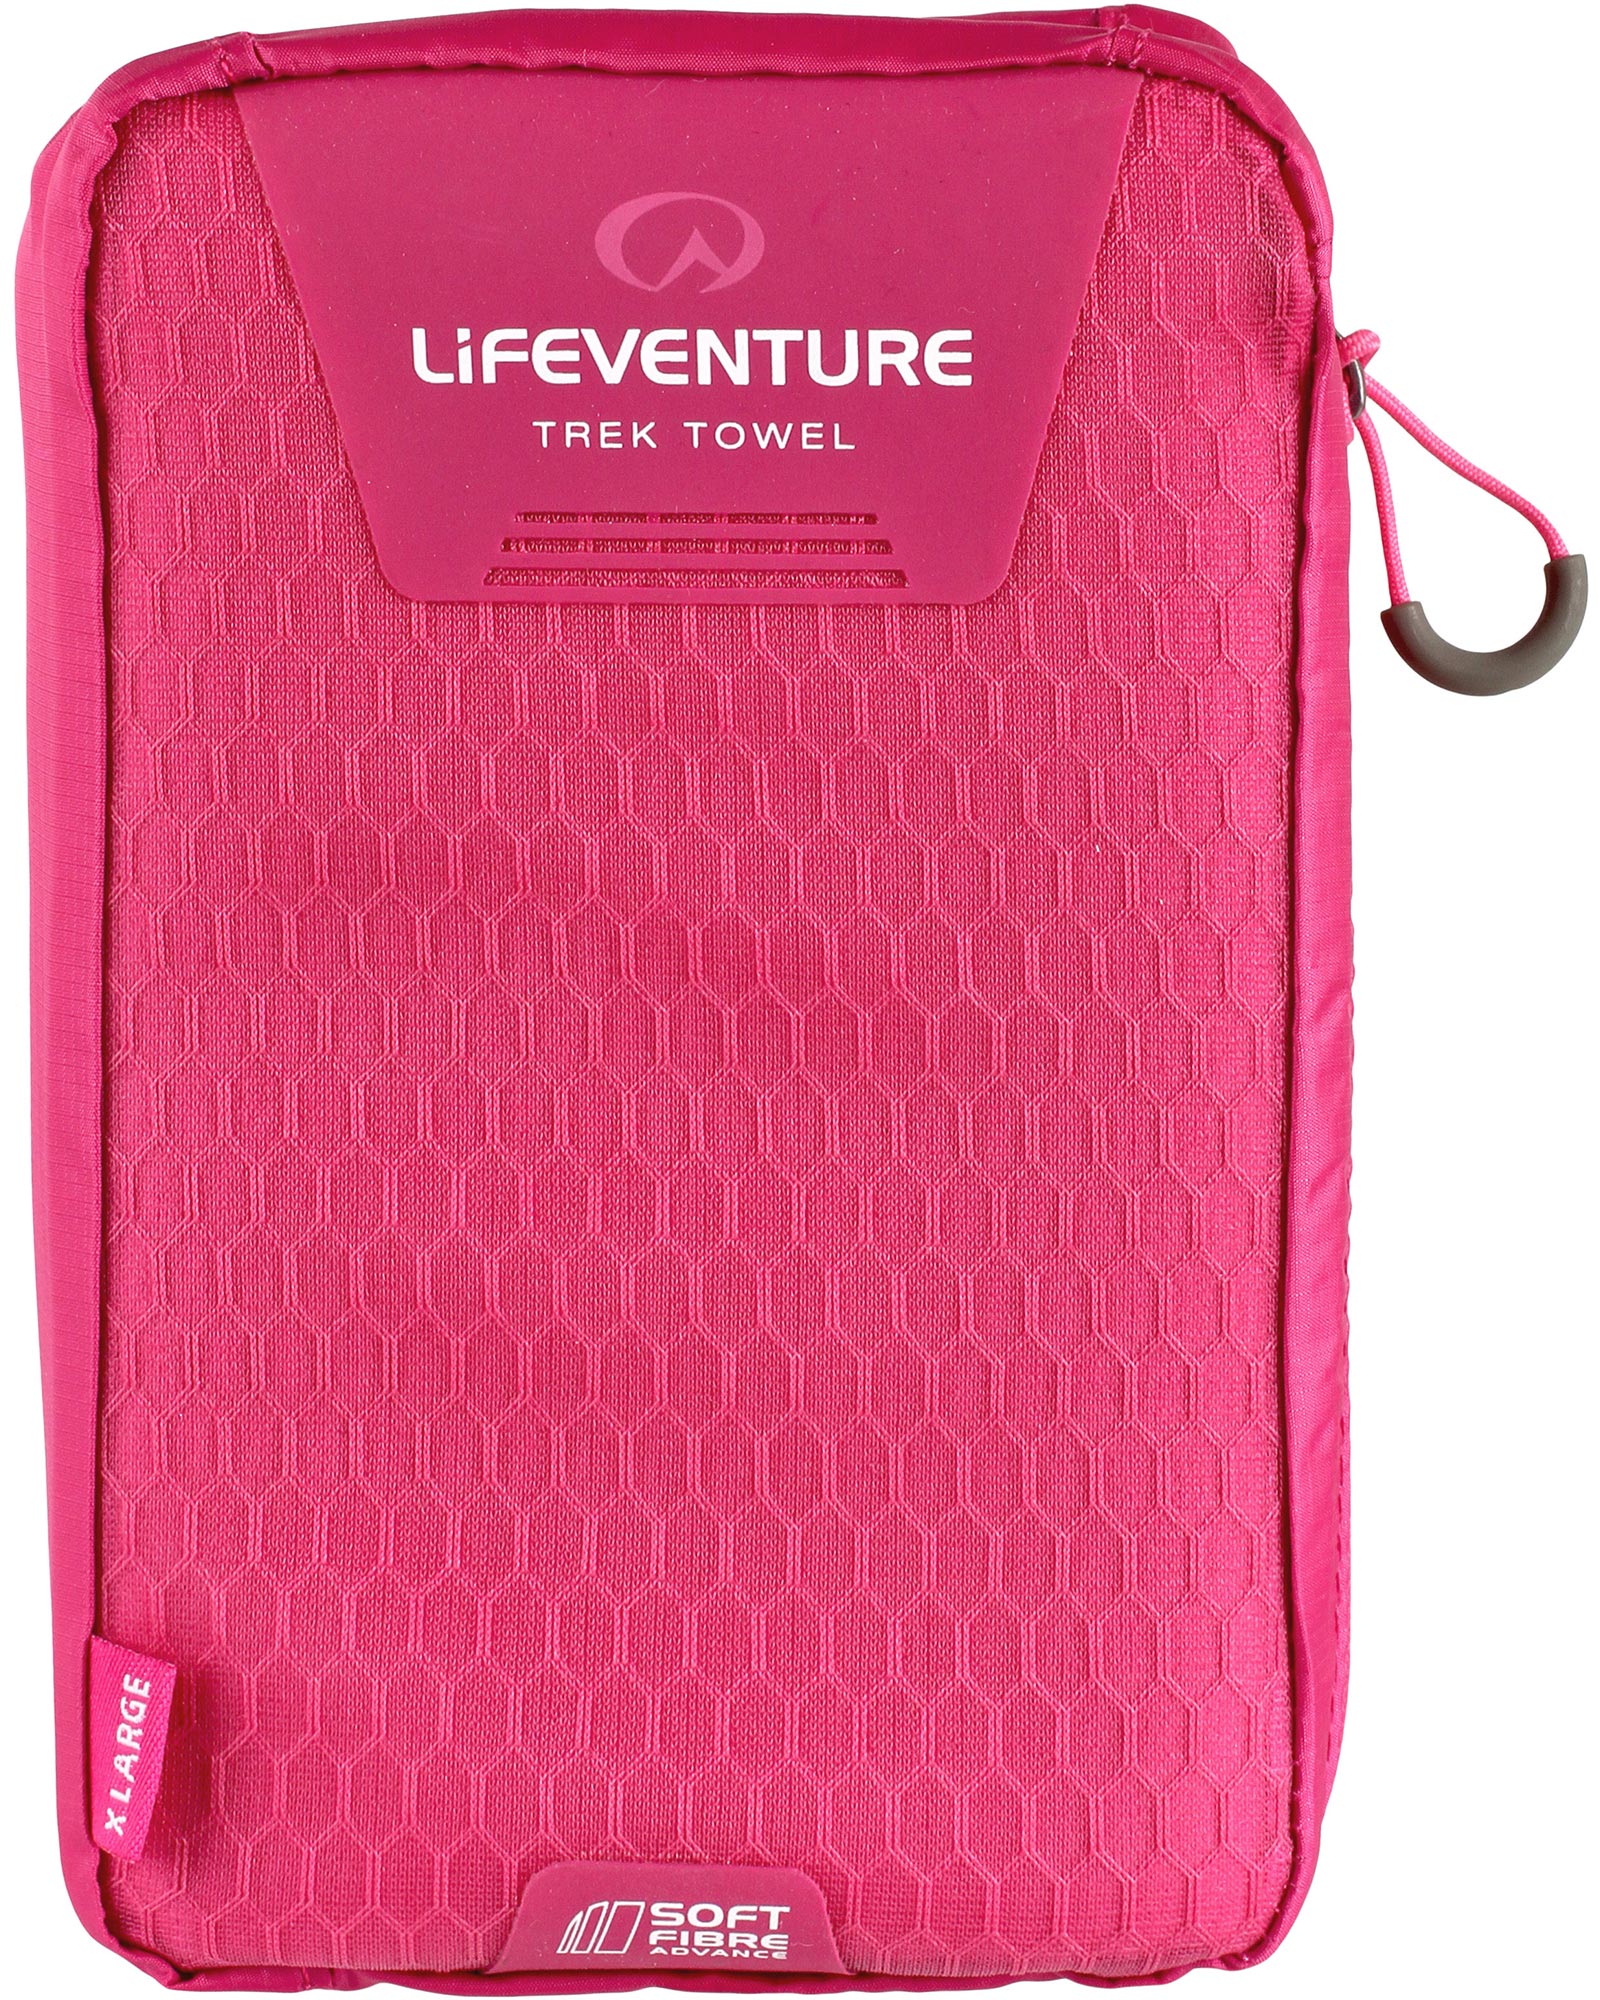 Lifeventure Soft Fibre Trek Towel   X Large - Pink